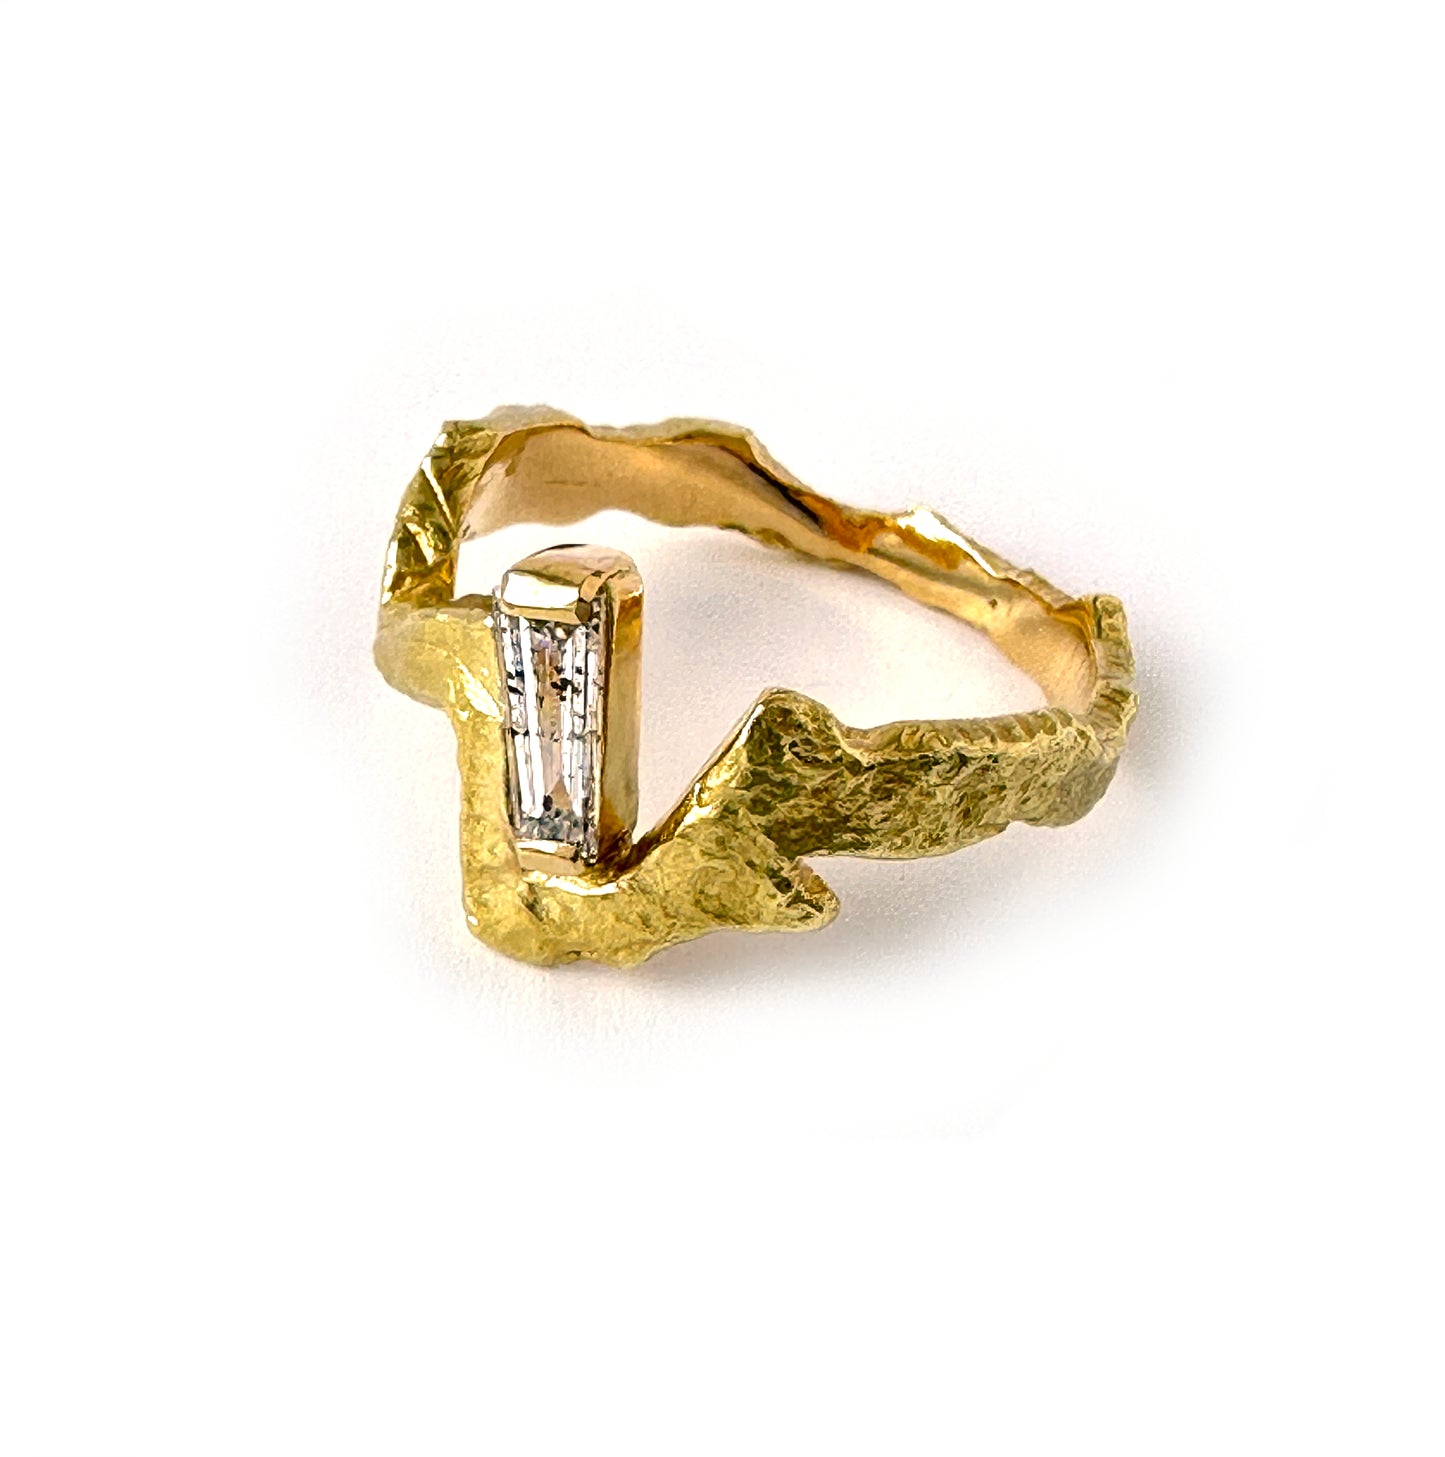 Jagged diamond companion ring